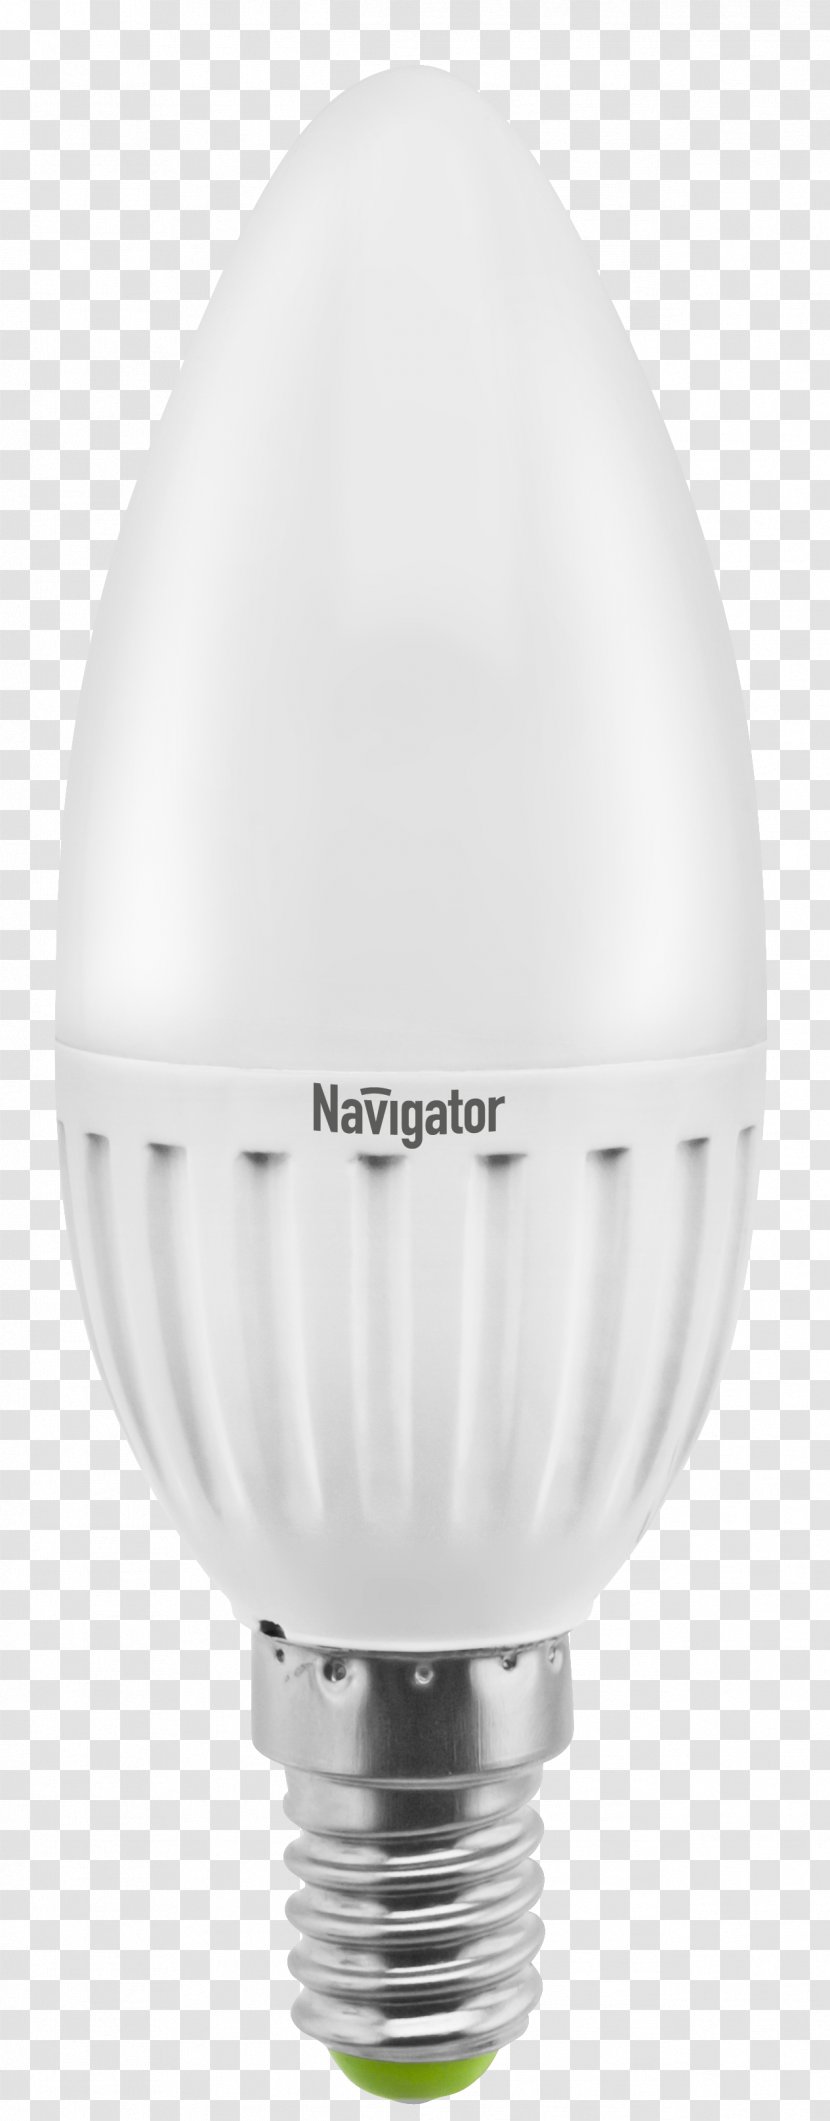 Lighting - Lamp Transparent PNG